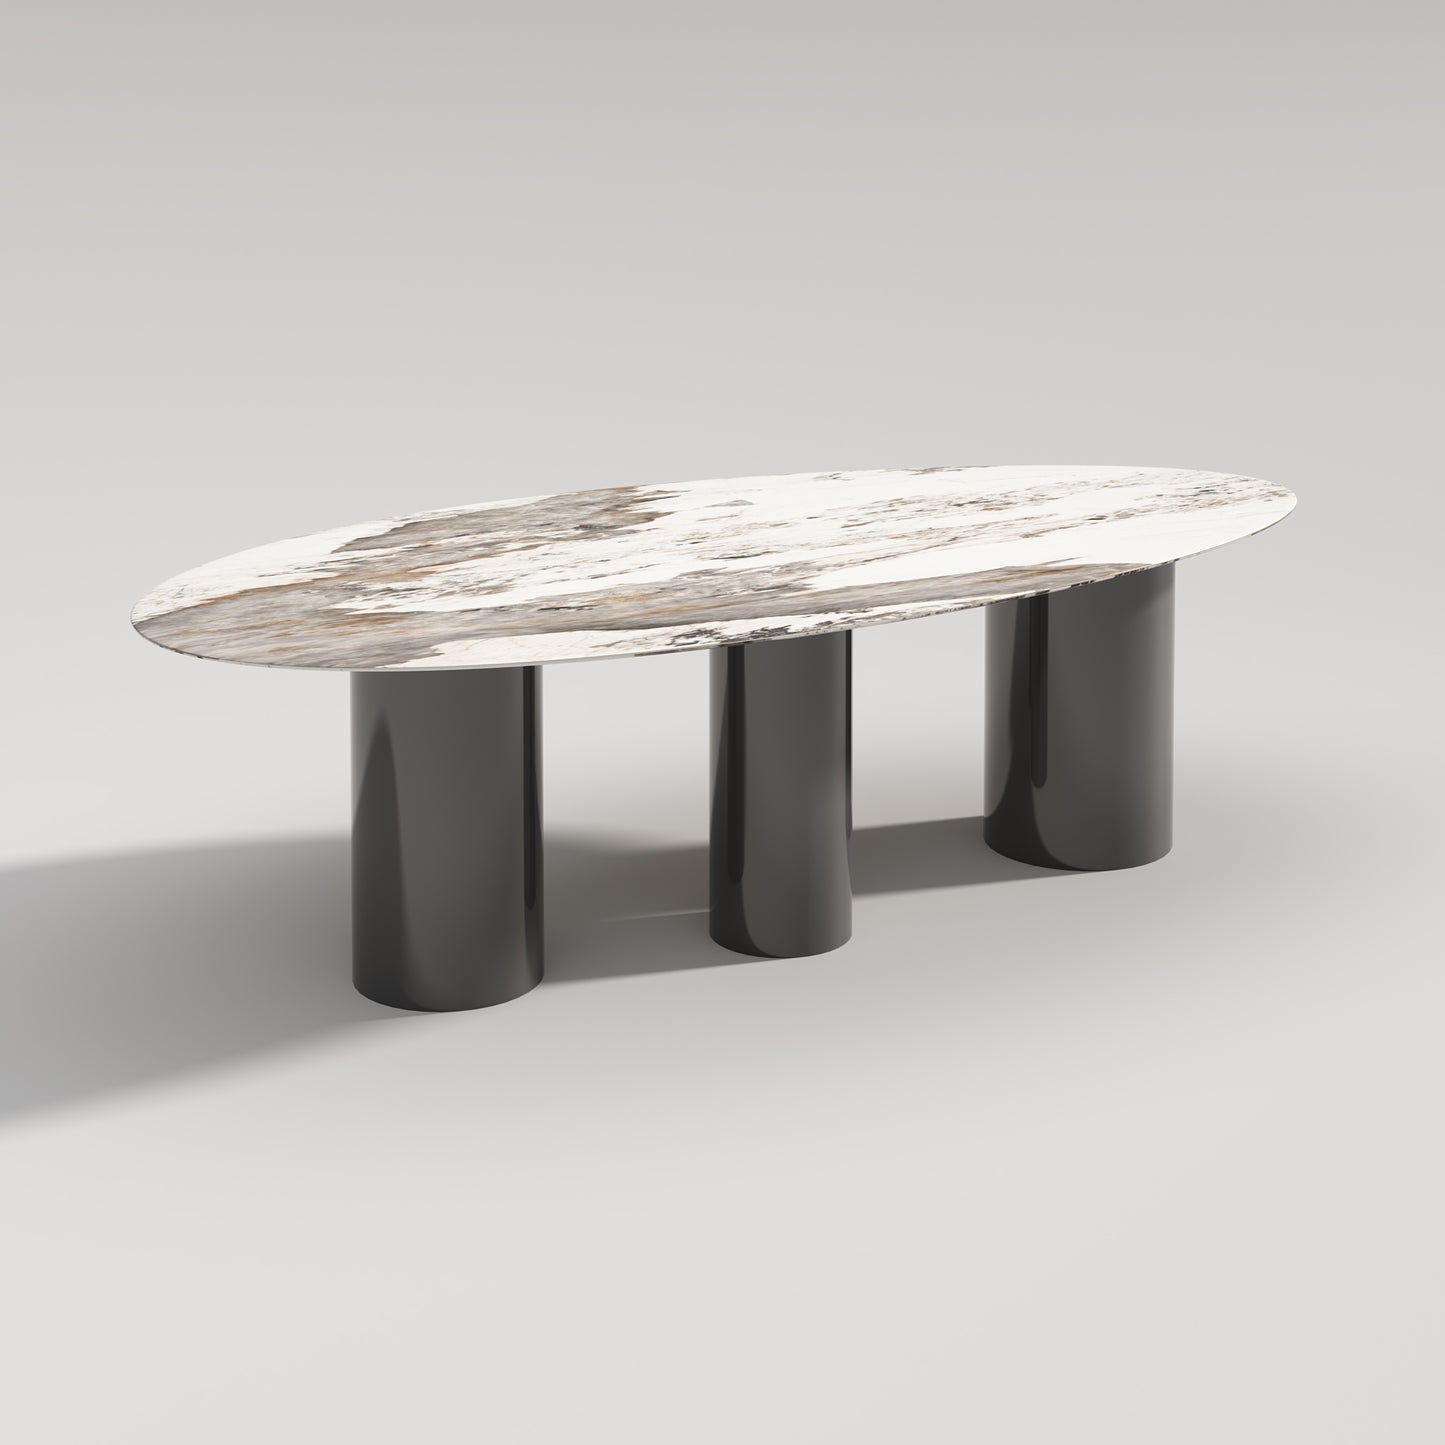 Lagos Pandora Sintered Stone Top Oval Rain Drop Shape Dining Table With Steel Legs 1.8m